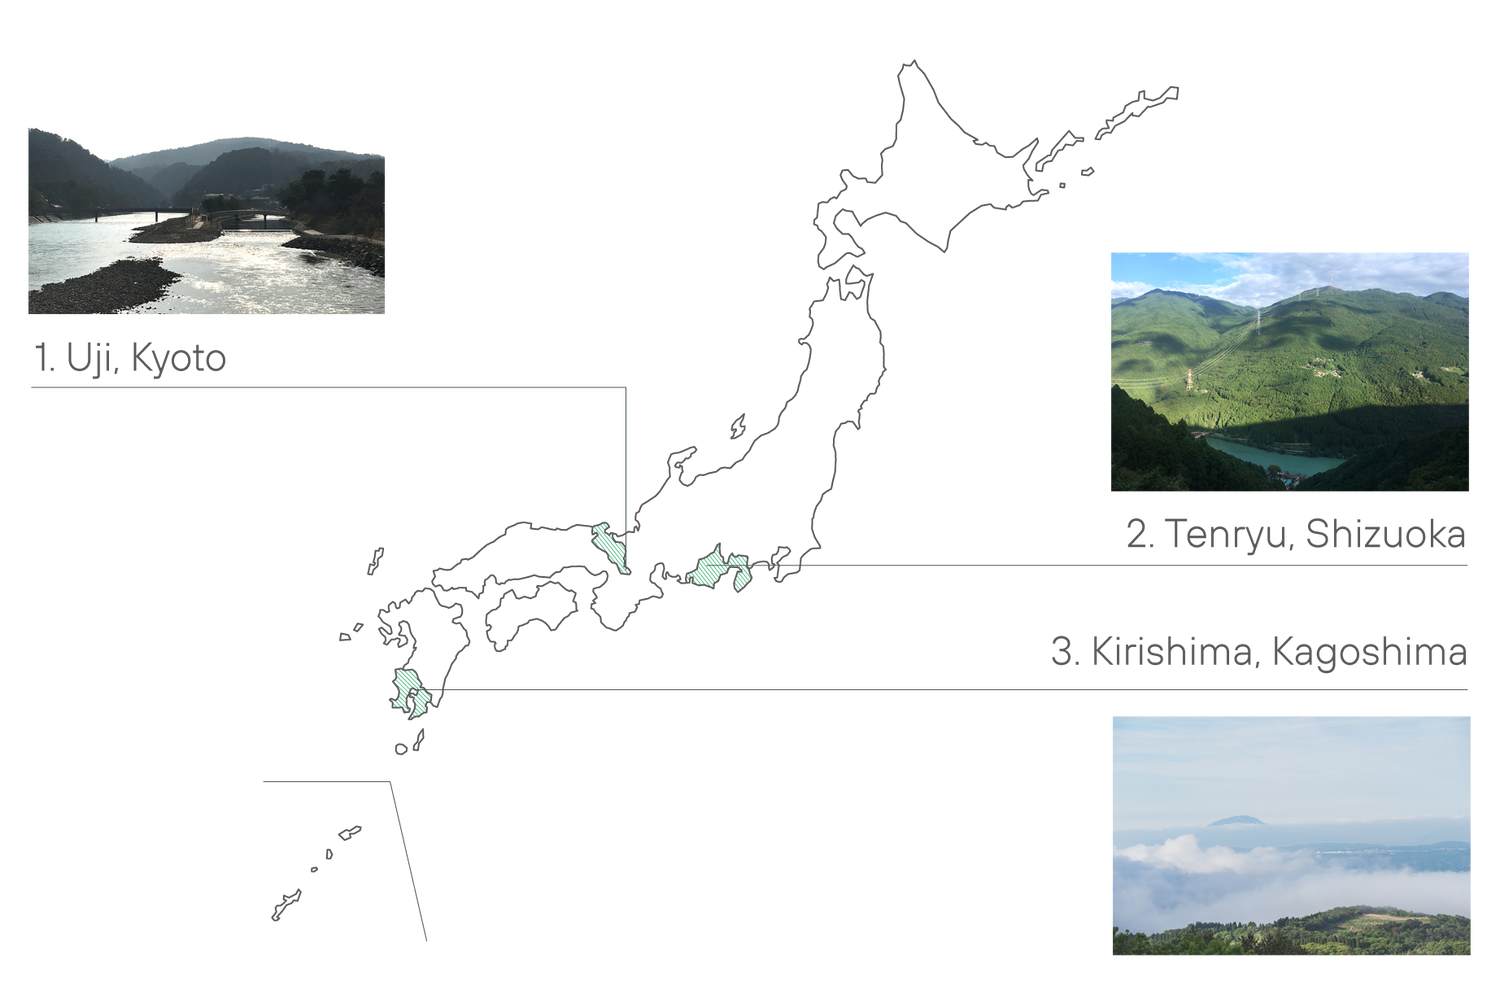 A map of Japan, with three locations highlighted with correlating photos from Kyoto, Shizuoka and Kirishima.